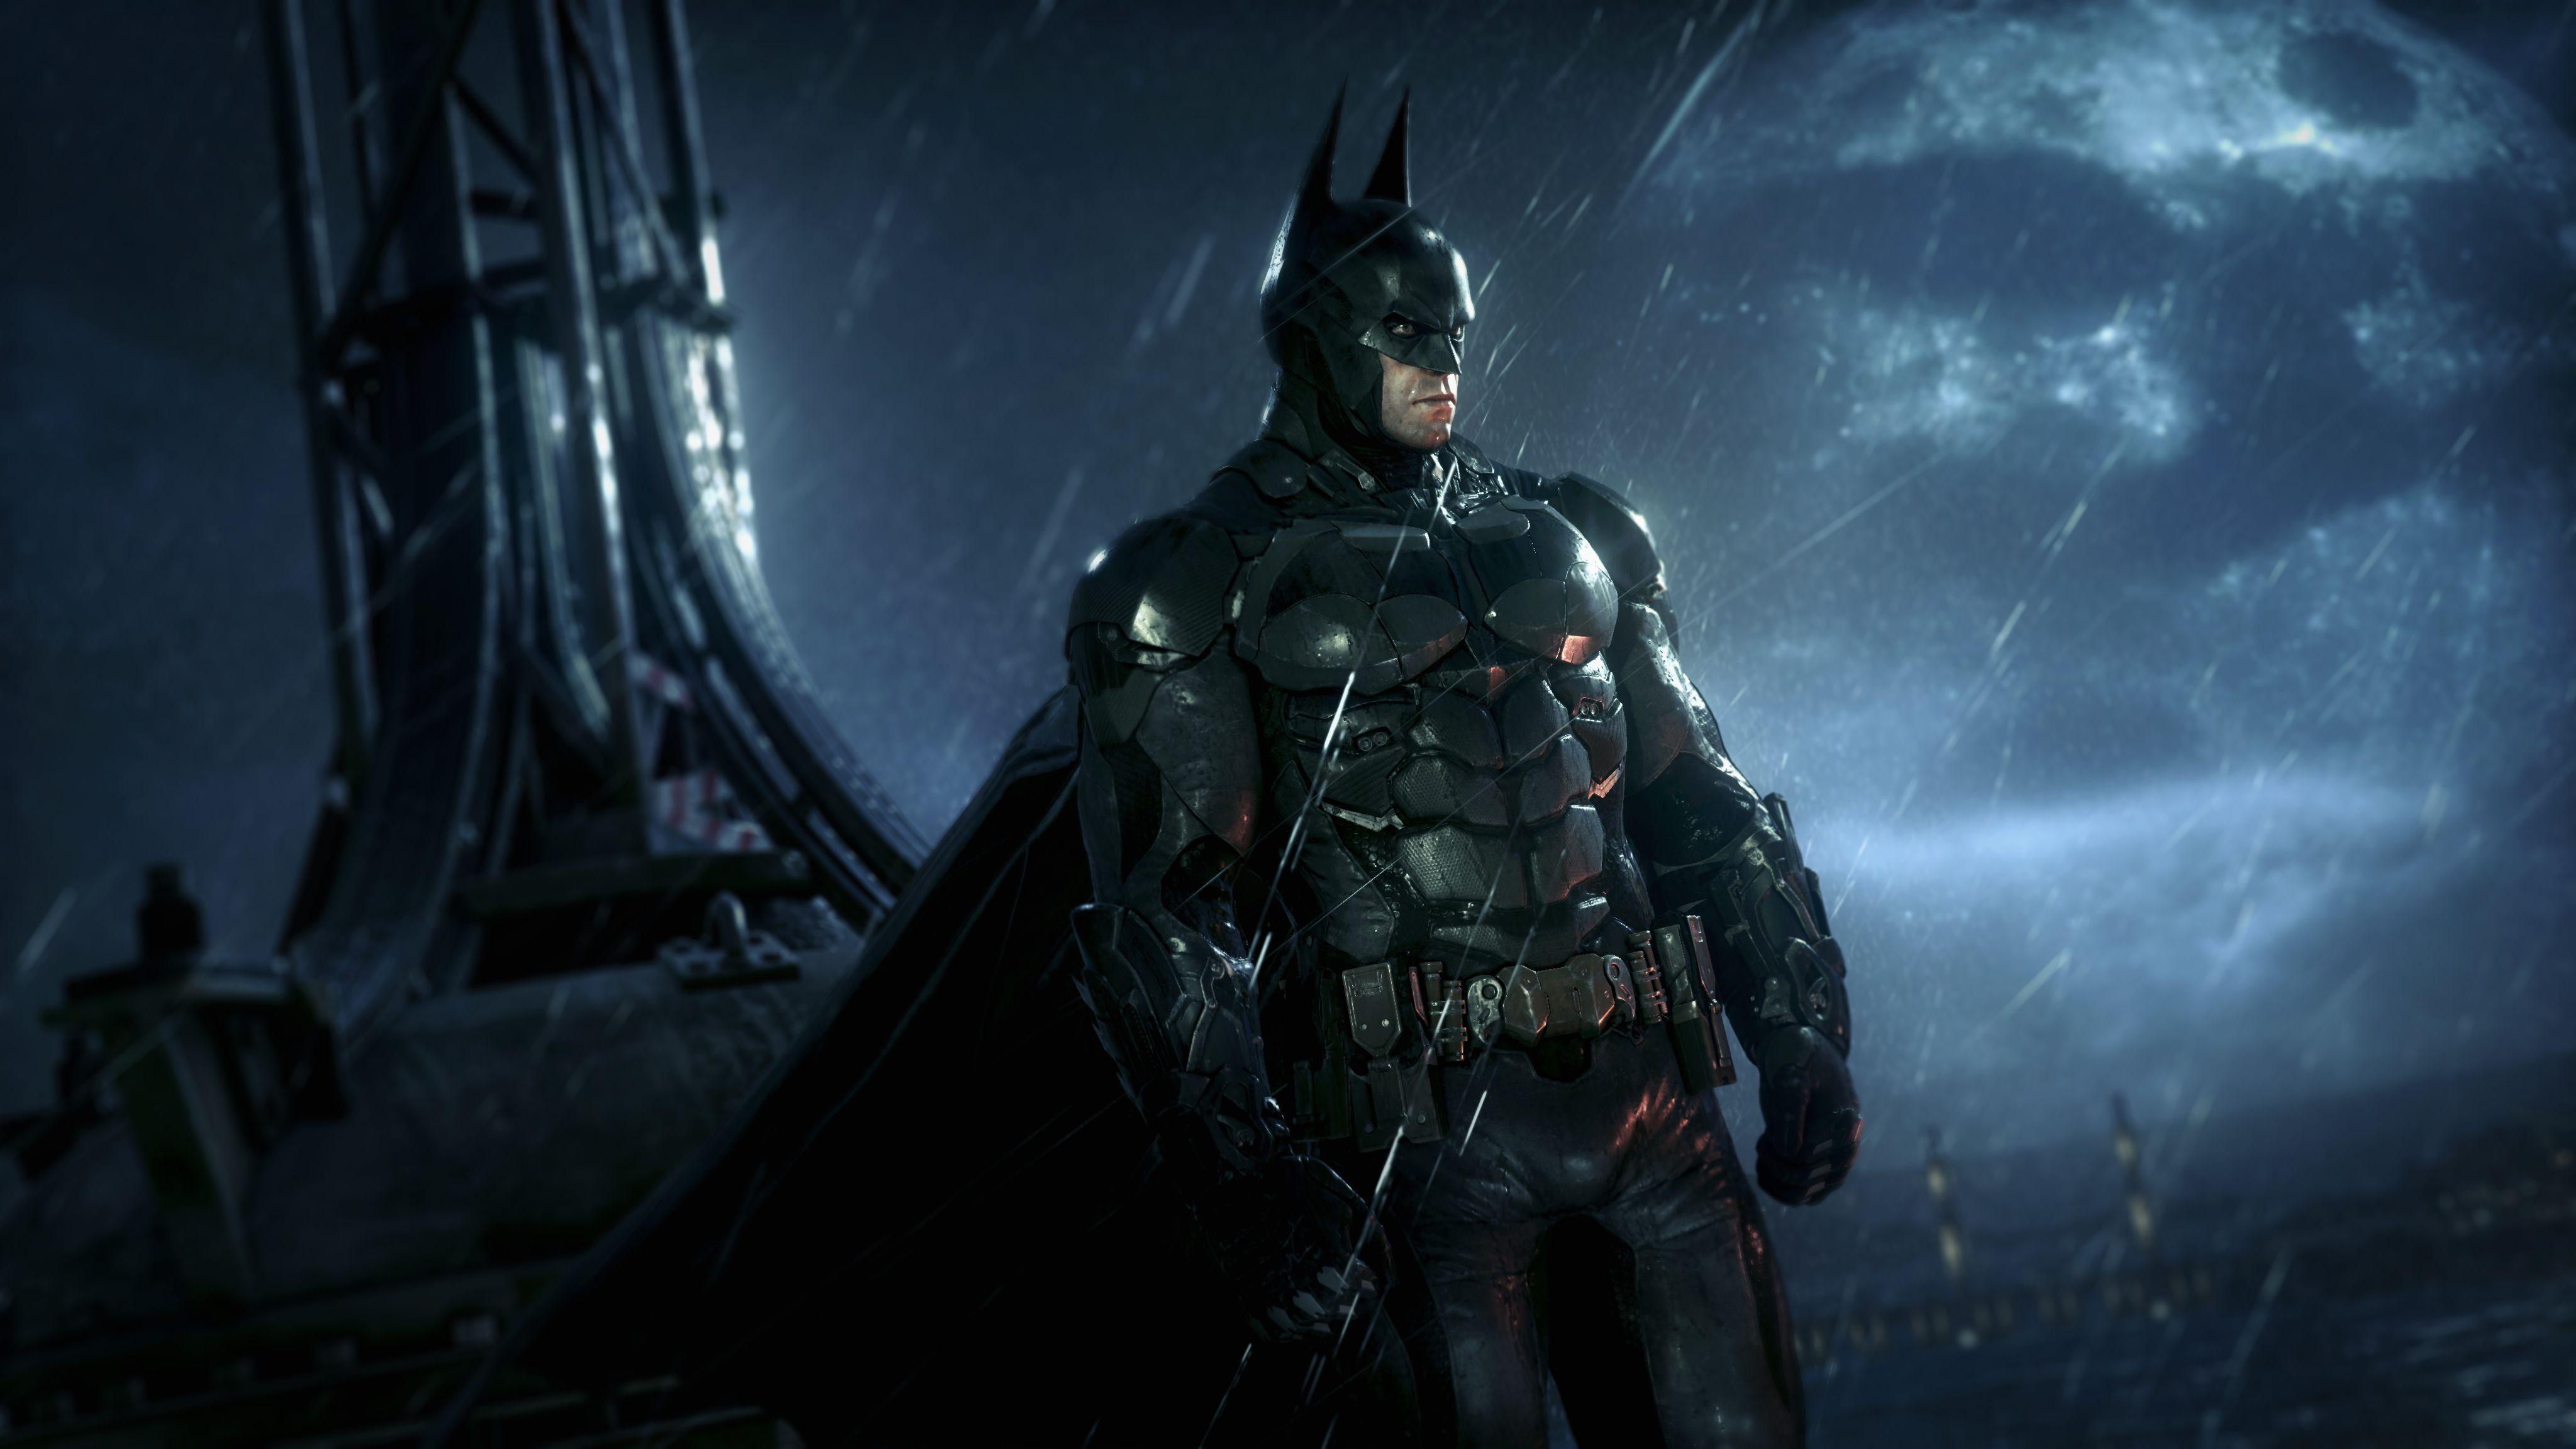 Batman: Arkham Knight HD Wallpaper. Background